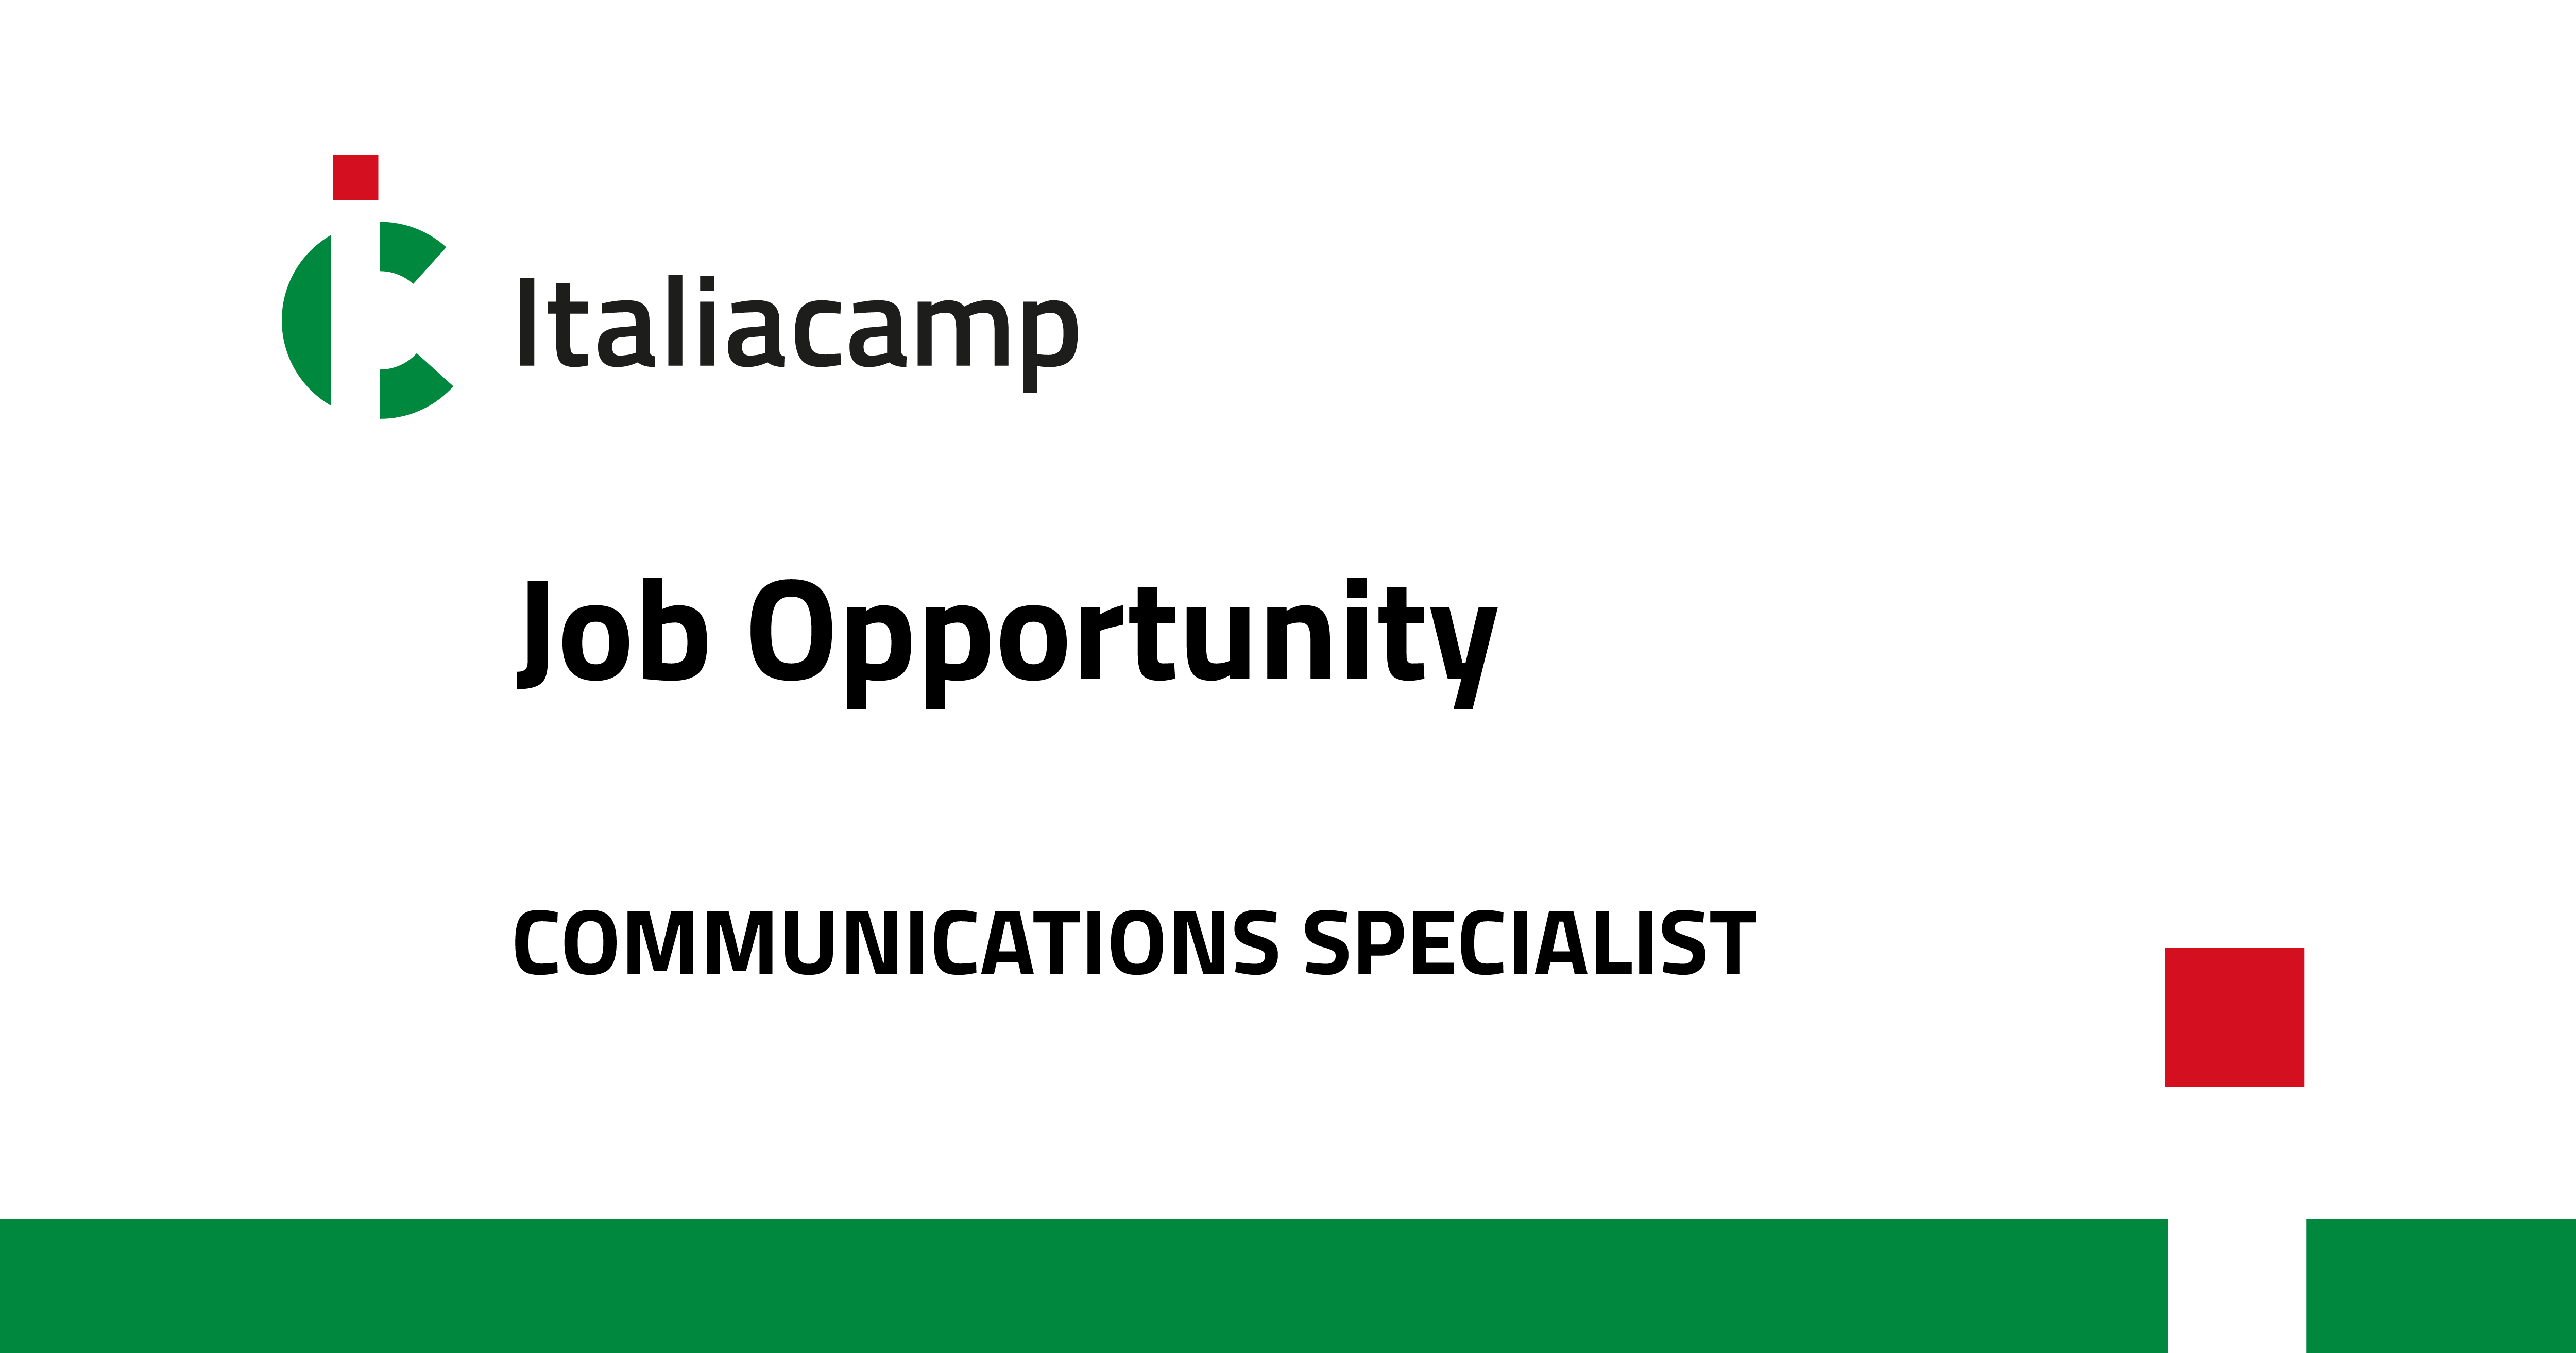 Italiacamp Communications Specialist